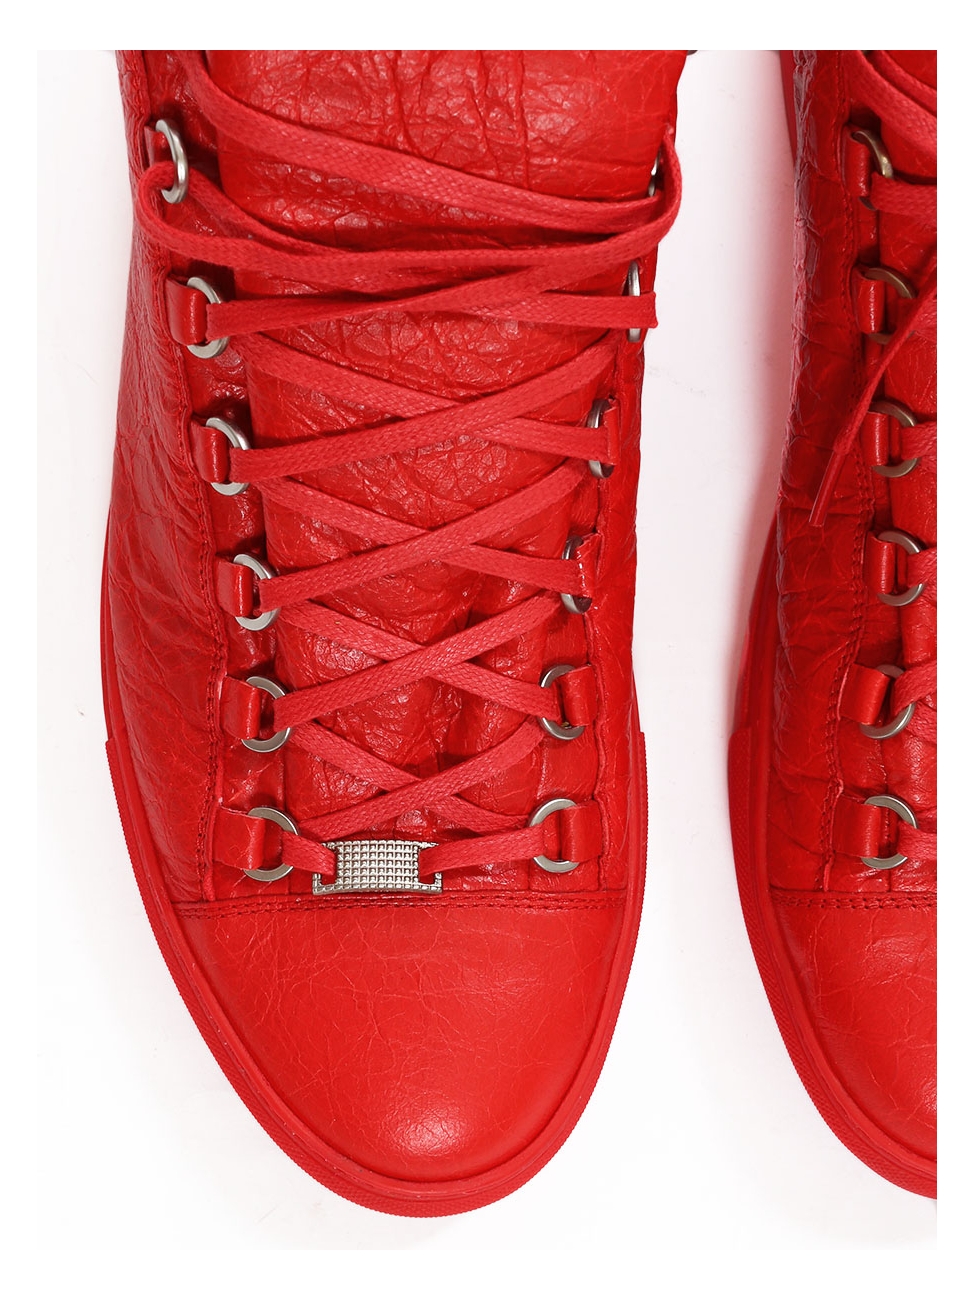 Afvoer woordenboek Vorige Boutique BALENCIAGA ARENA Red leather sneakers Retail price $645 Size 44